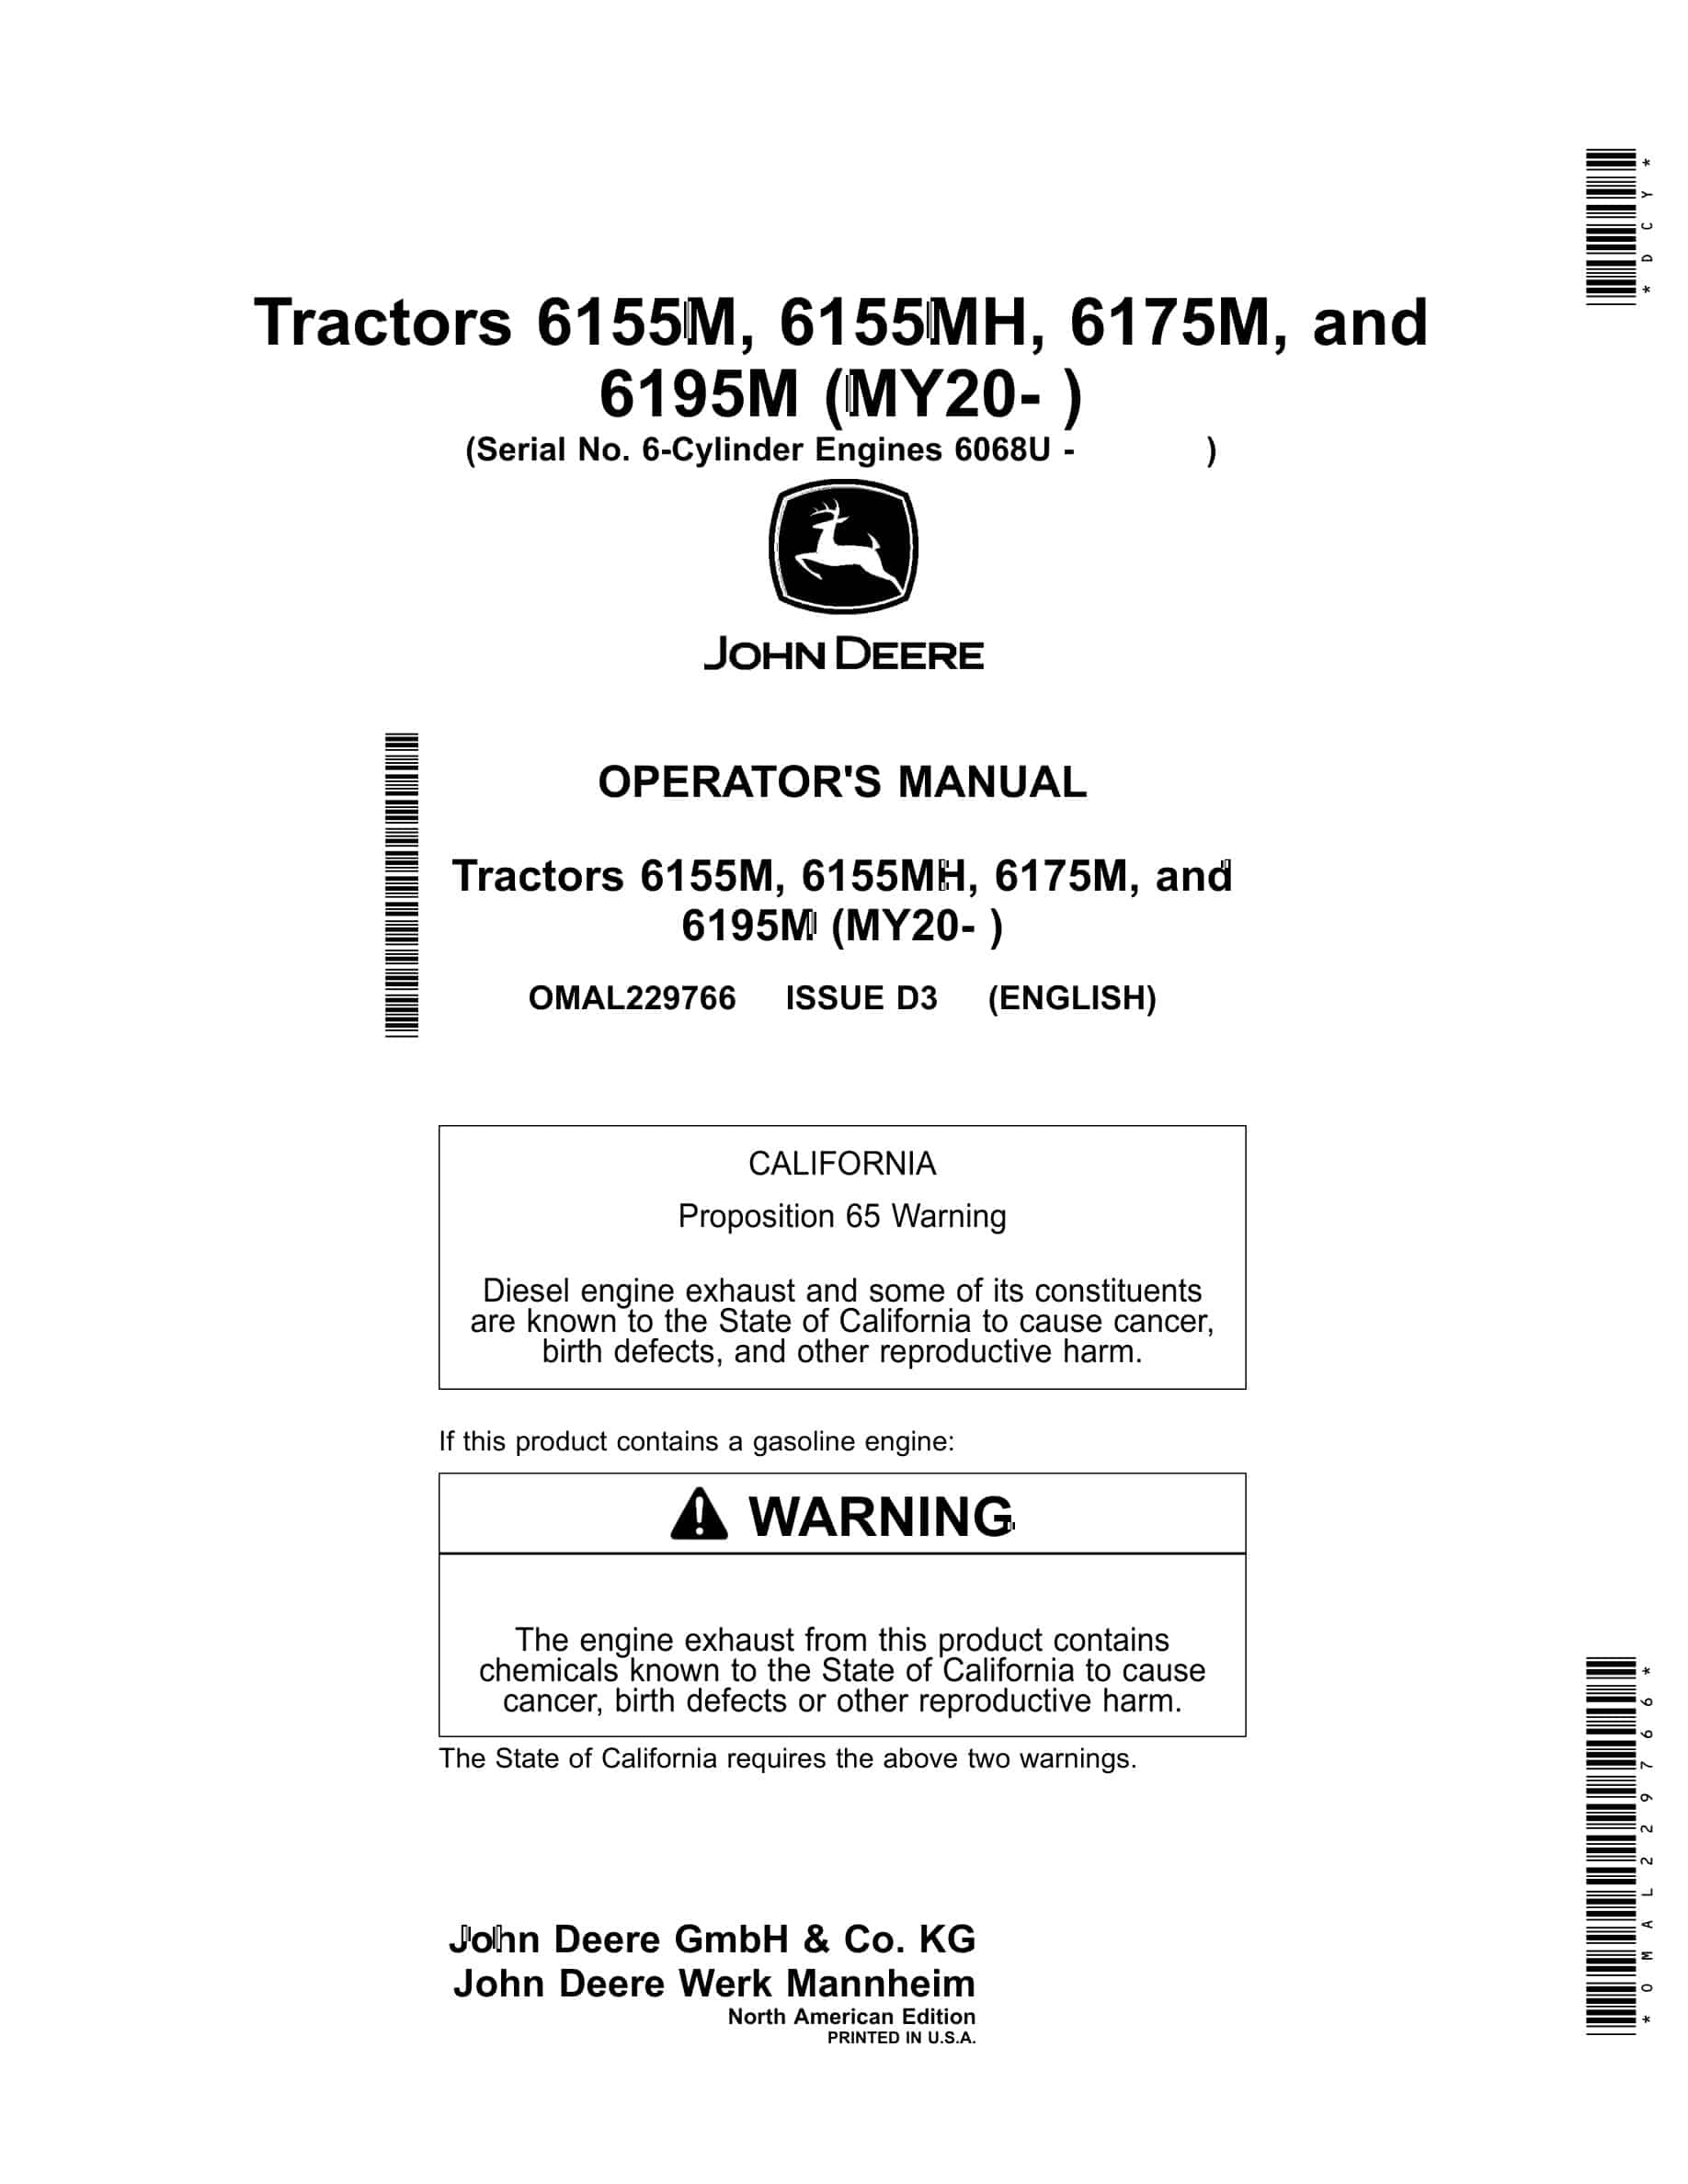 John Deere 6155m, 6155mh, 6175m, And 6195m (my20- ) Tractors Operator Manuals OMAL229766-1